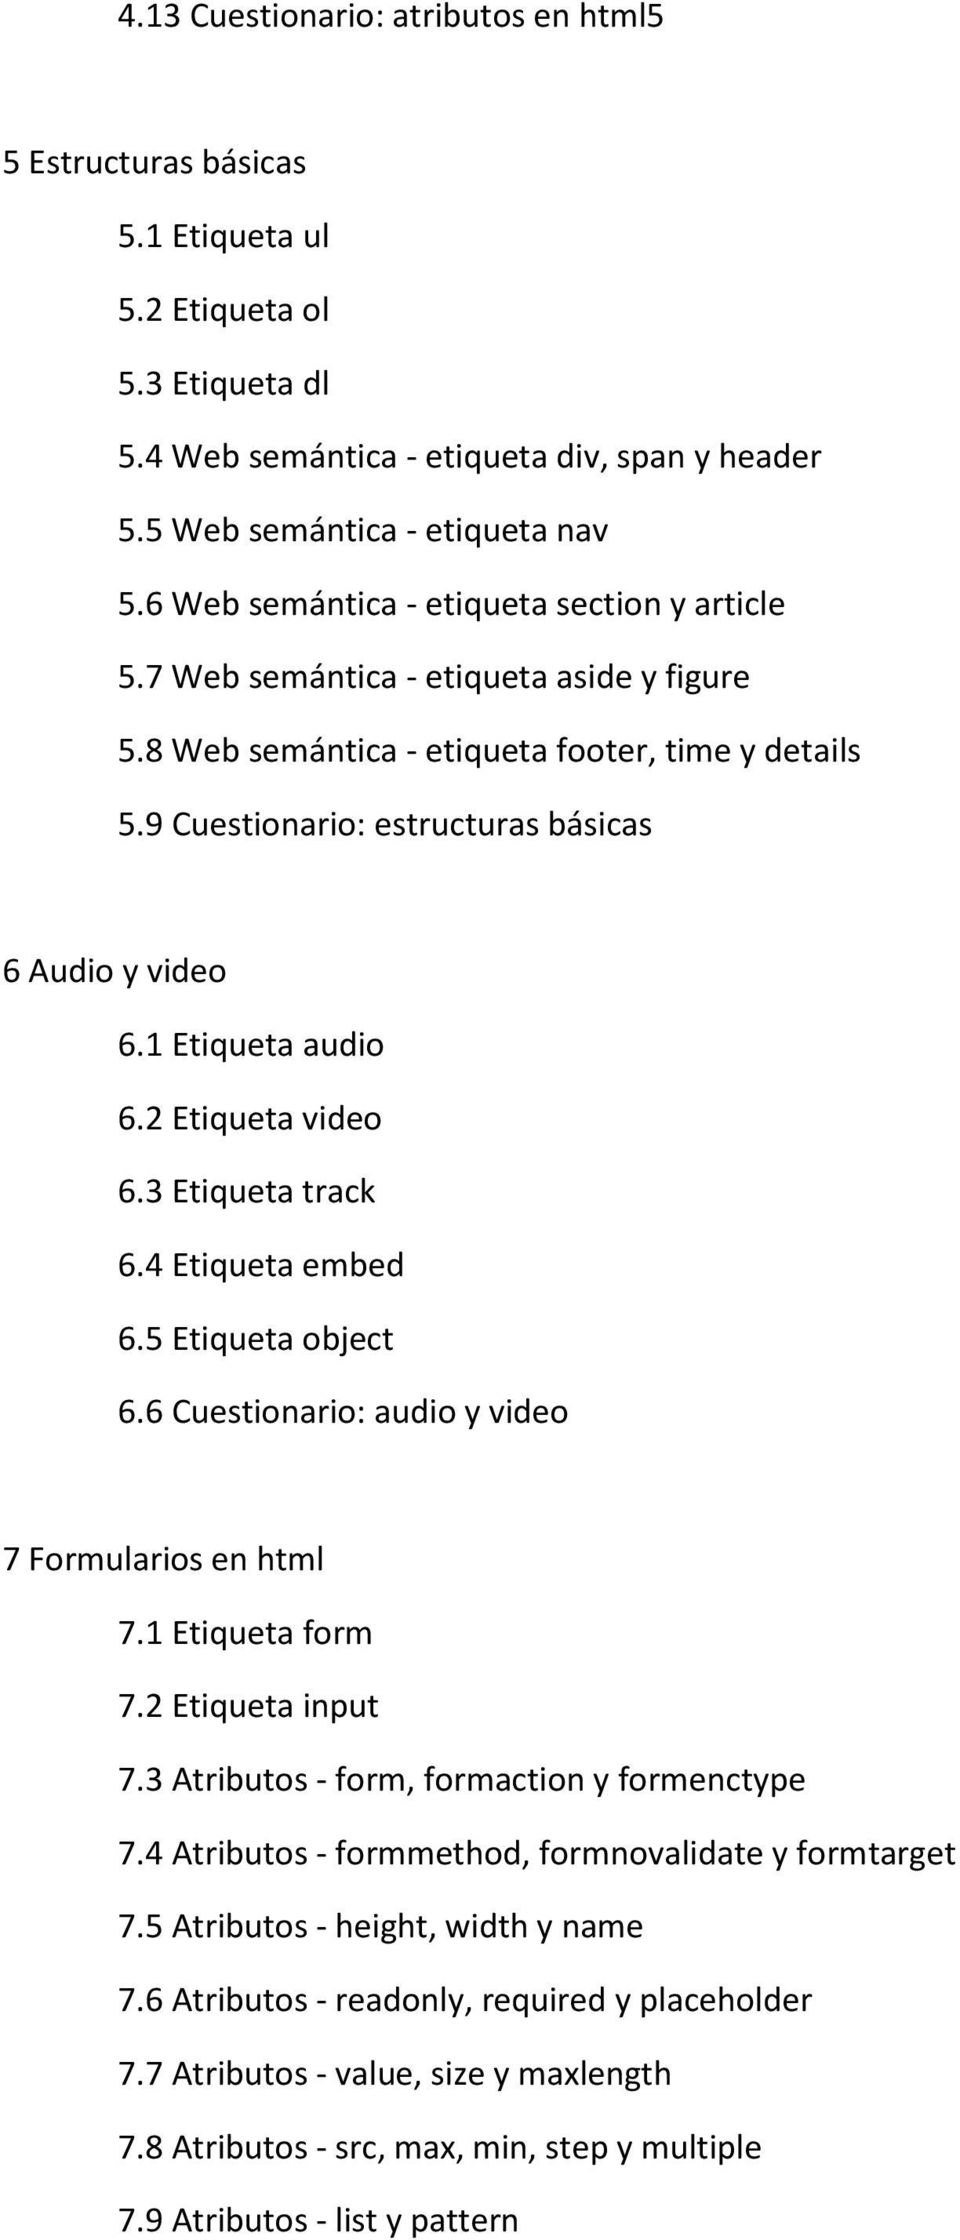 1 Etiqueta audio 6.2 Etiqueta video 6.3 Etiqueta track 6.4 Etiqueta embed 6.5 Etiqueta object 6.6 Cuestionario: audio y video 7 Formularios en html 7.1 Etiqueta form 7.2 Etiqueta input 7.